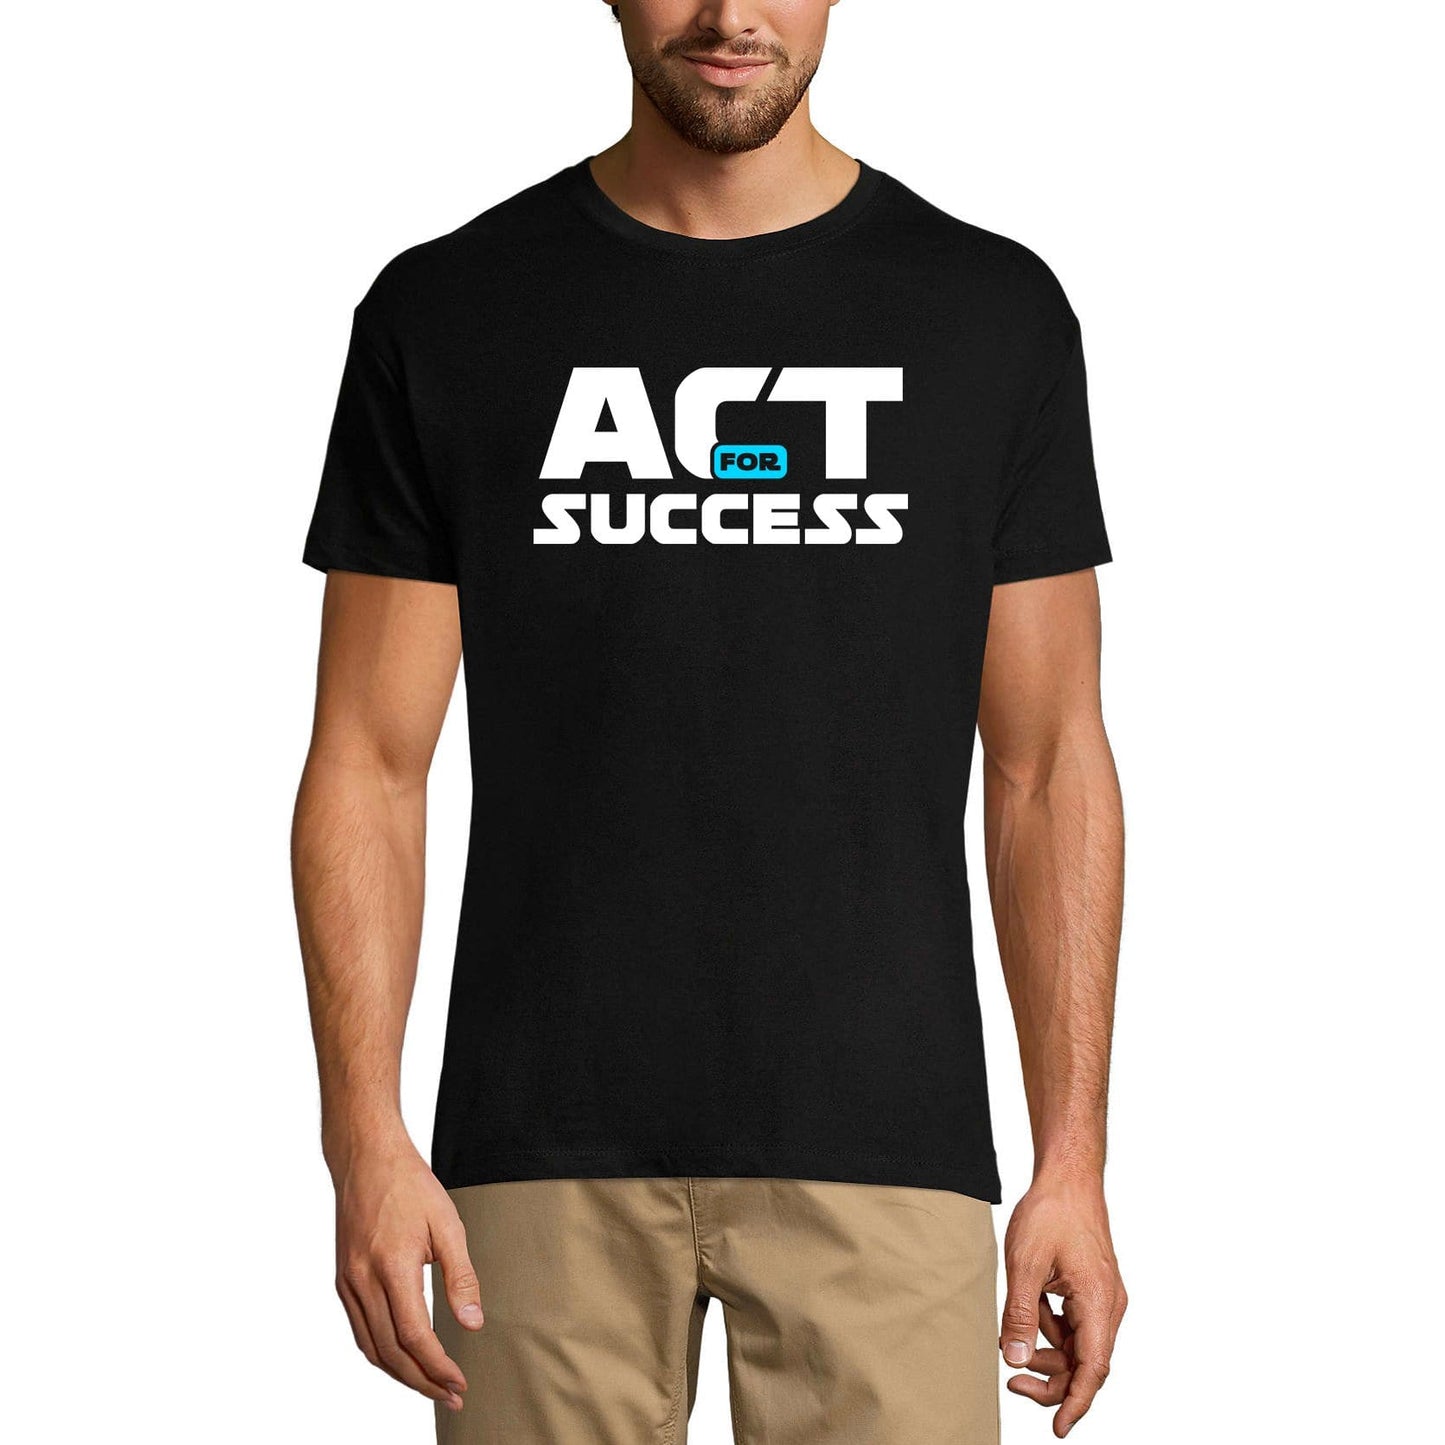 ULTRABASIC Men's T-Shirt Act for Success - Motivational Inspiration Shirt for Businessman